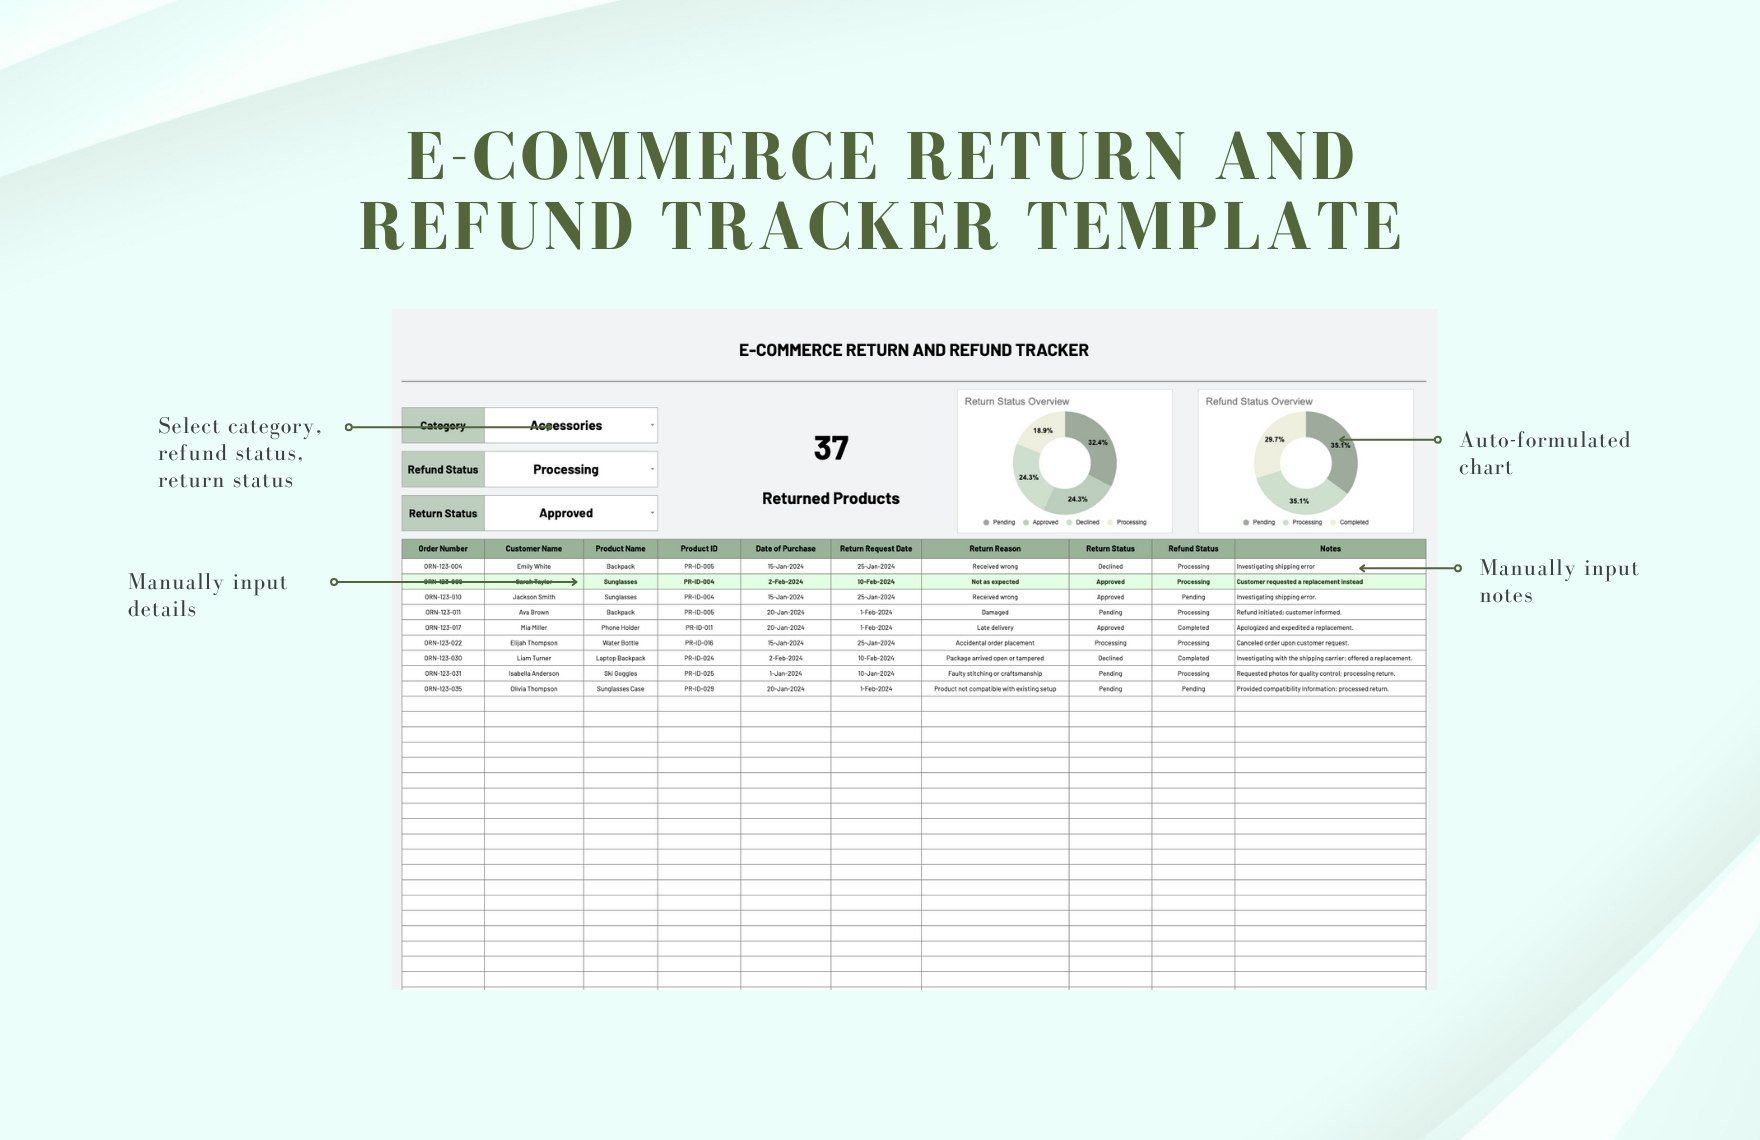 E-commerce Return and Refund Tracker Template